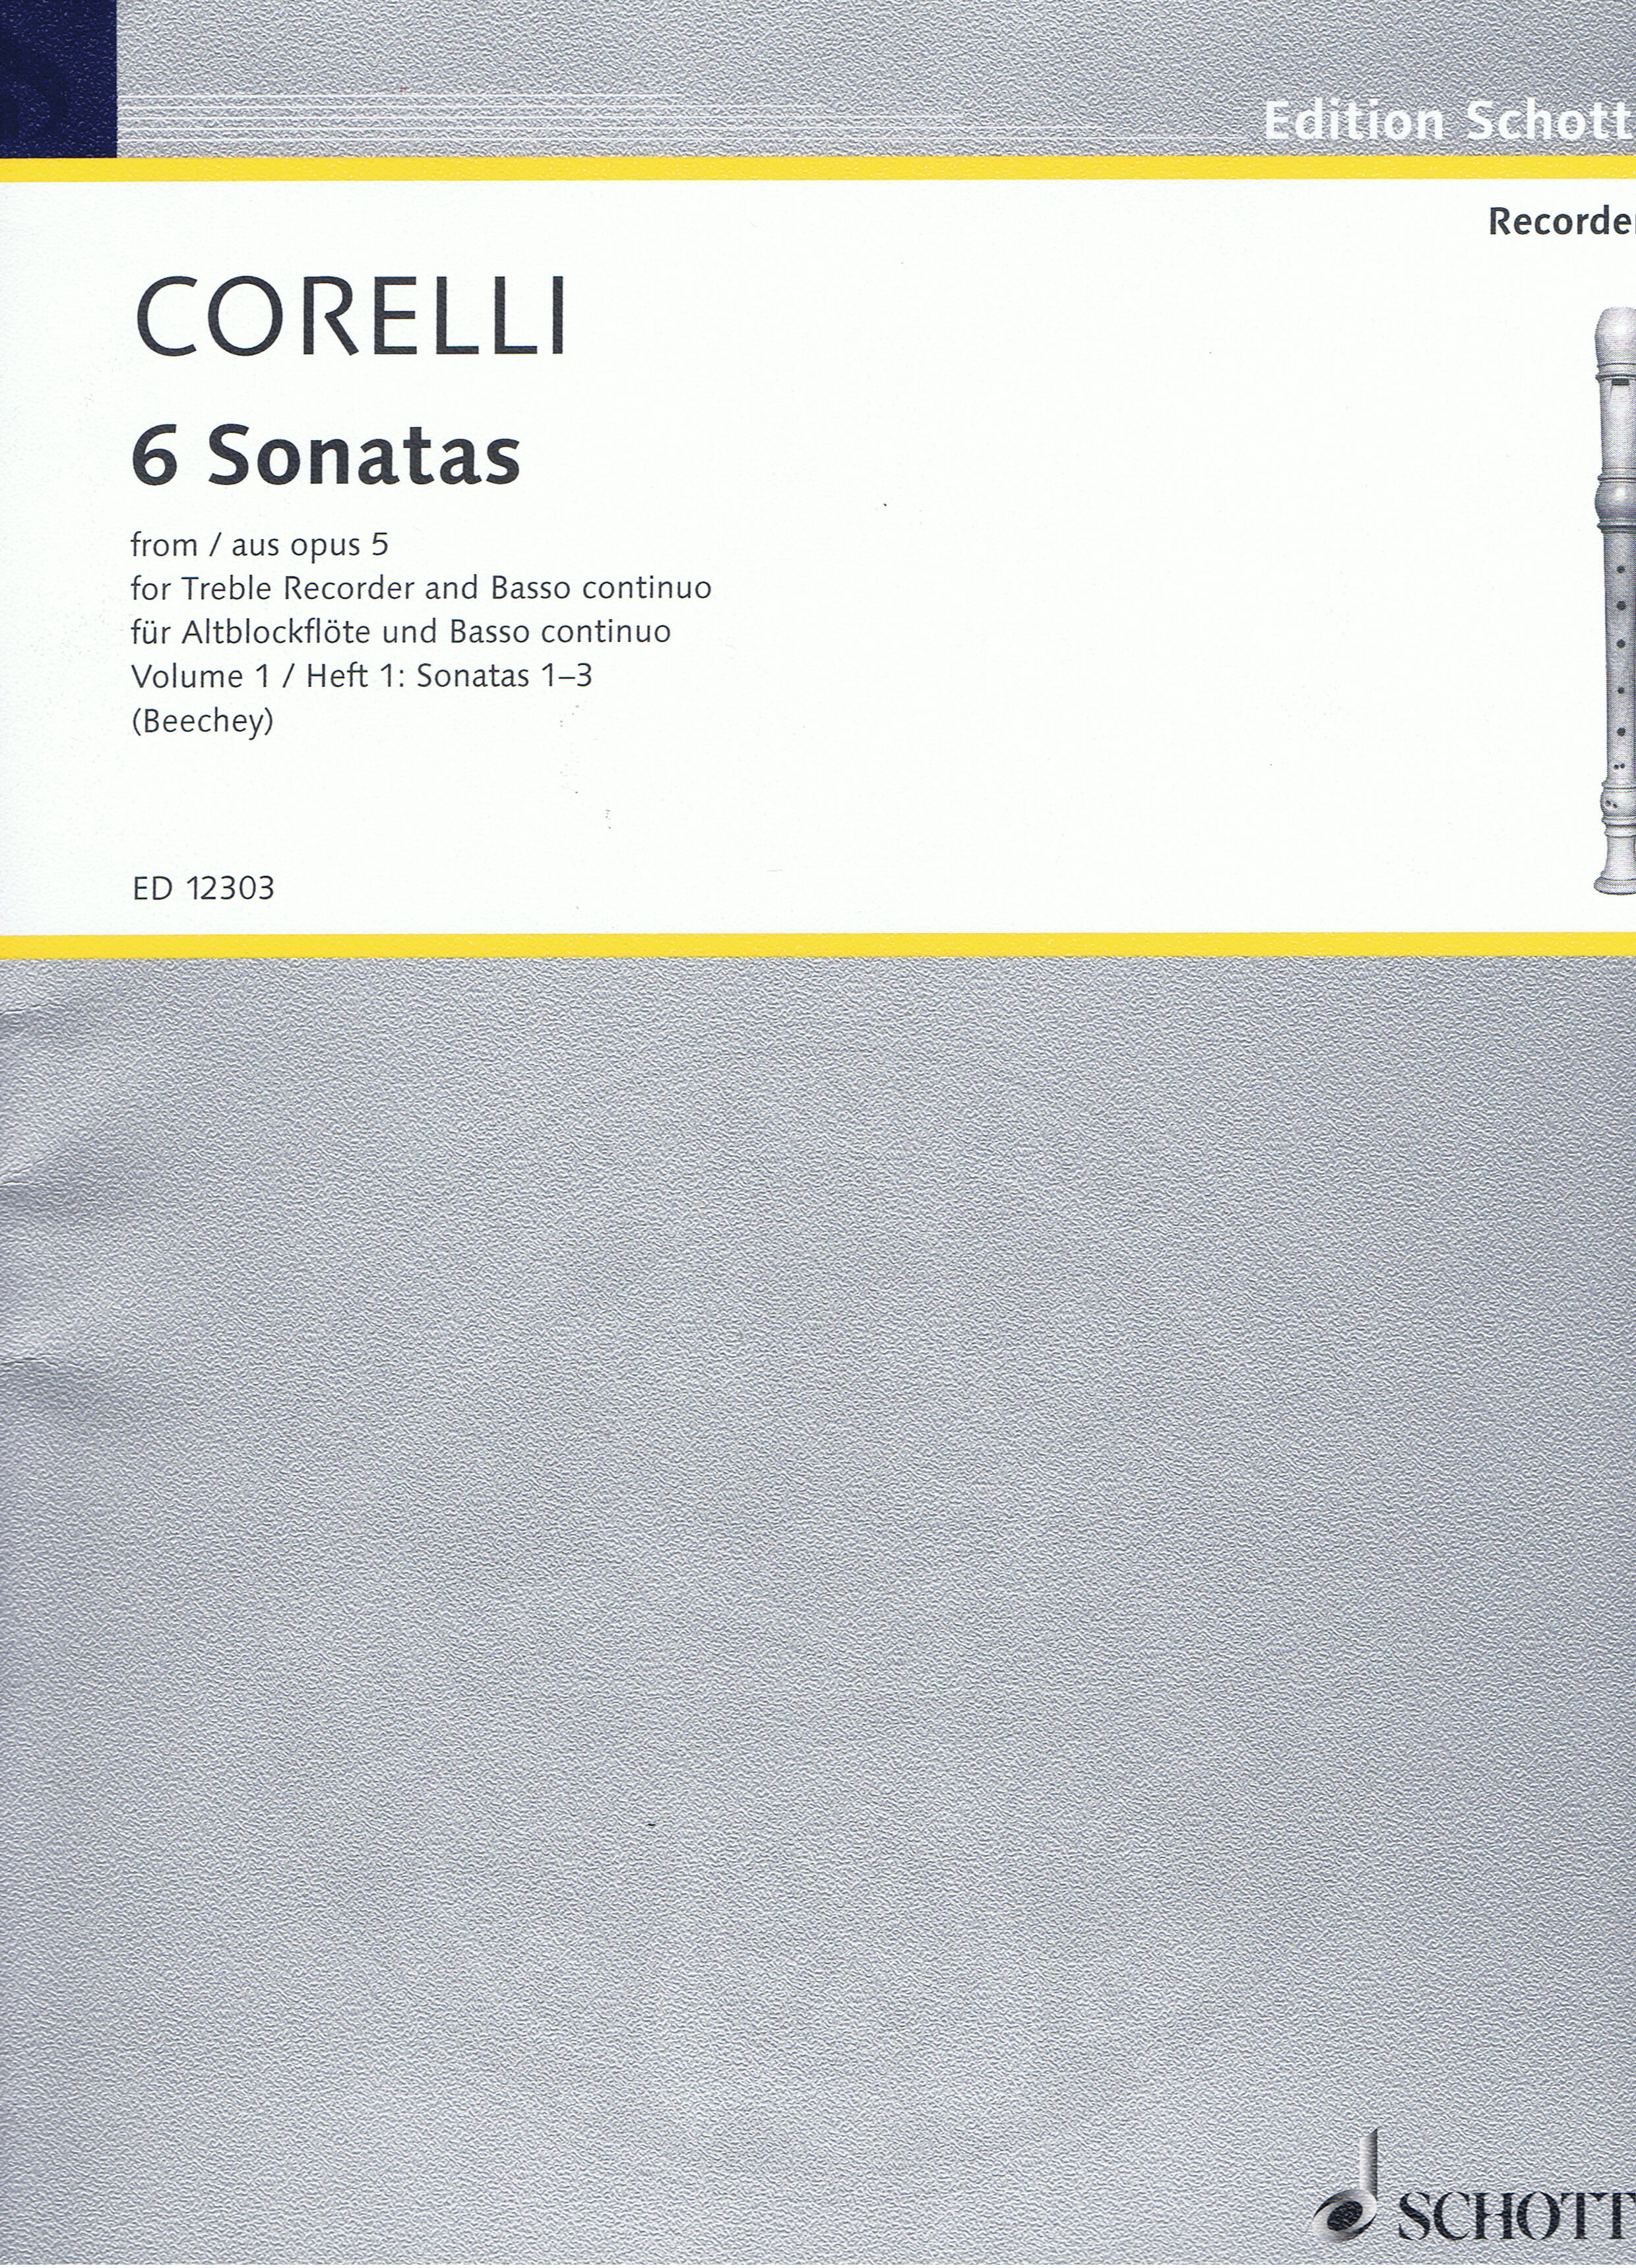 Arcangelo Corelli: Sonaten(6) 1 Op.5: Treble Recorder: Score and Parts